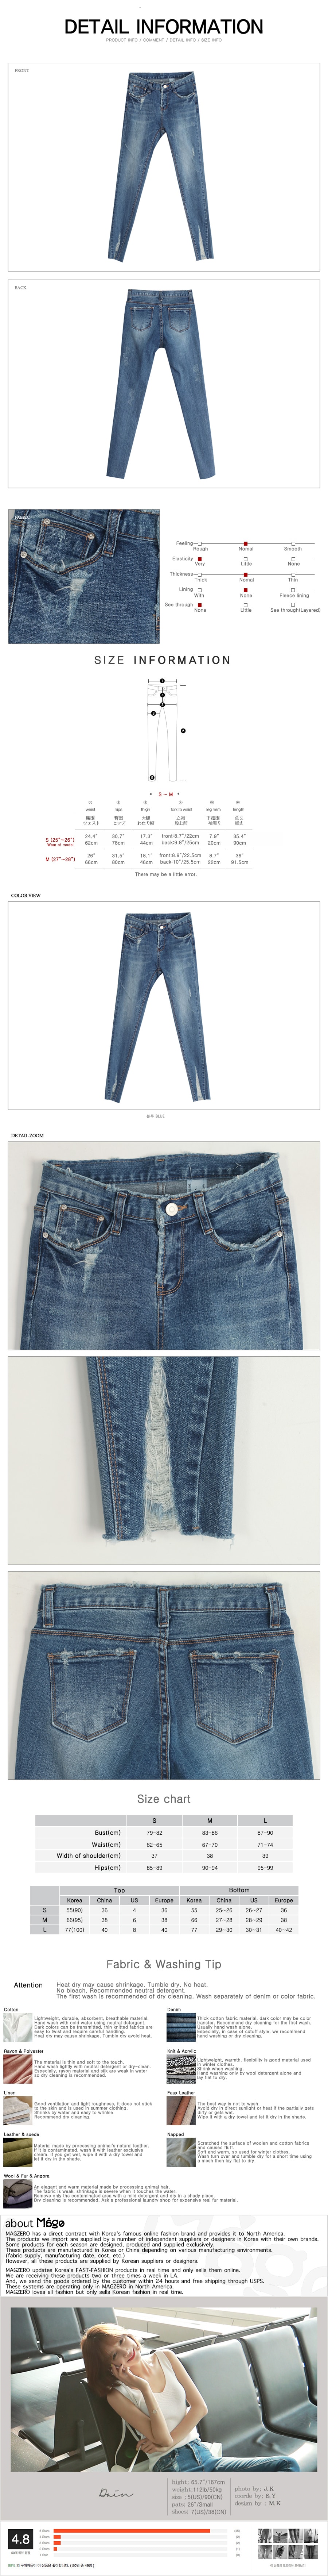 KOREA Distressed Hem Skinny Jeans #Blue S(25-26) [Free Shipping]